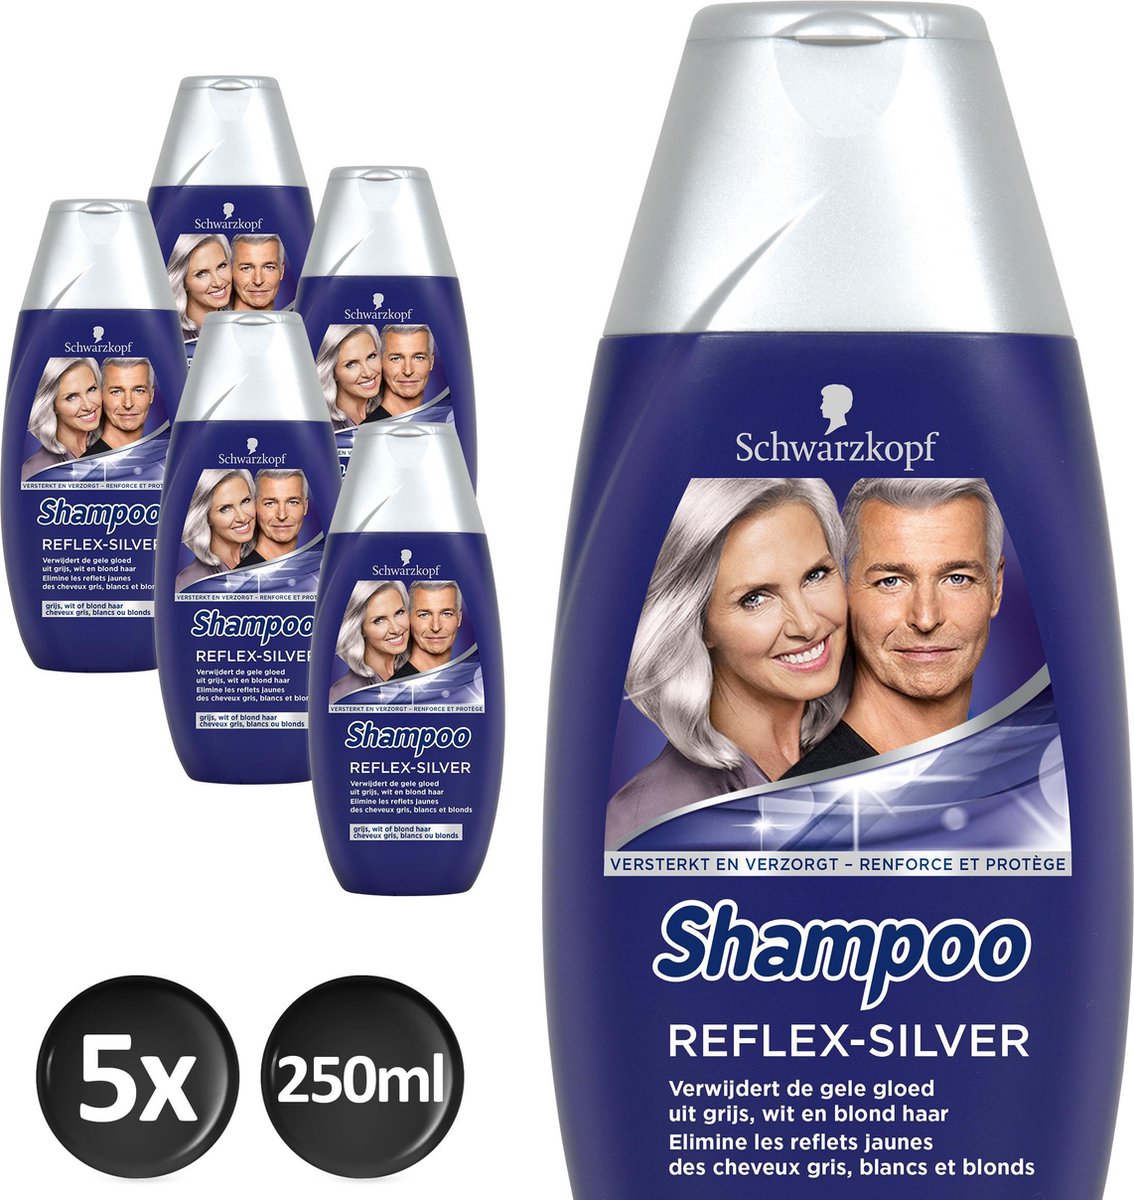 Schwarzkopf Reflex Silver Shampoo 5x 250ml - Voordeelverpakking bol.com